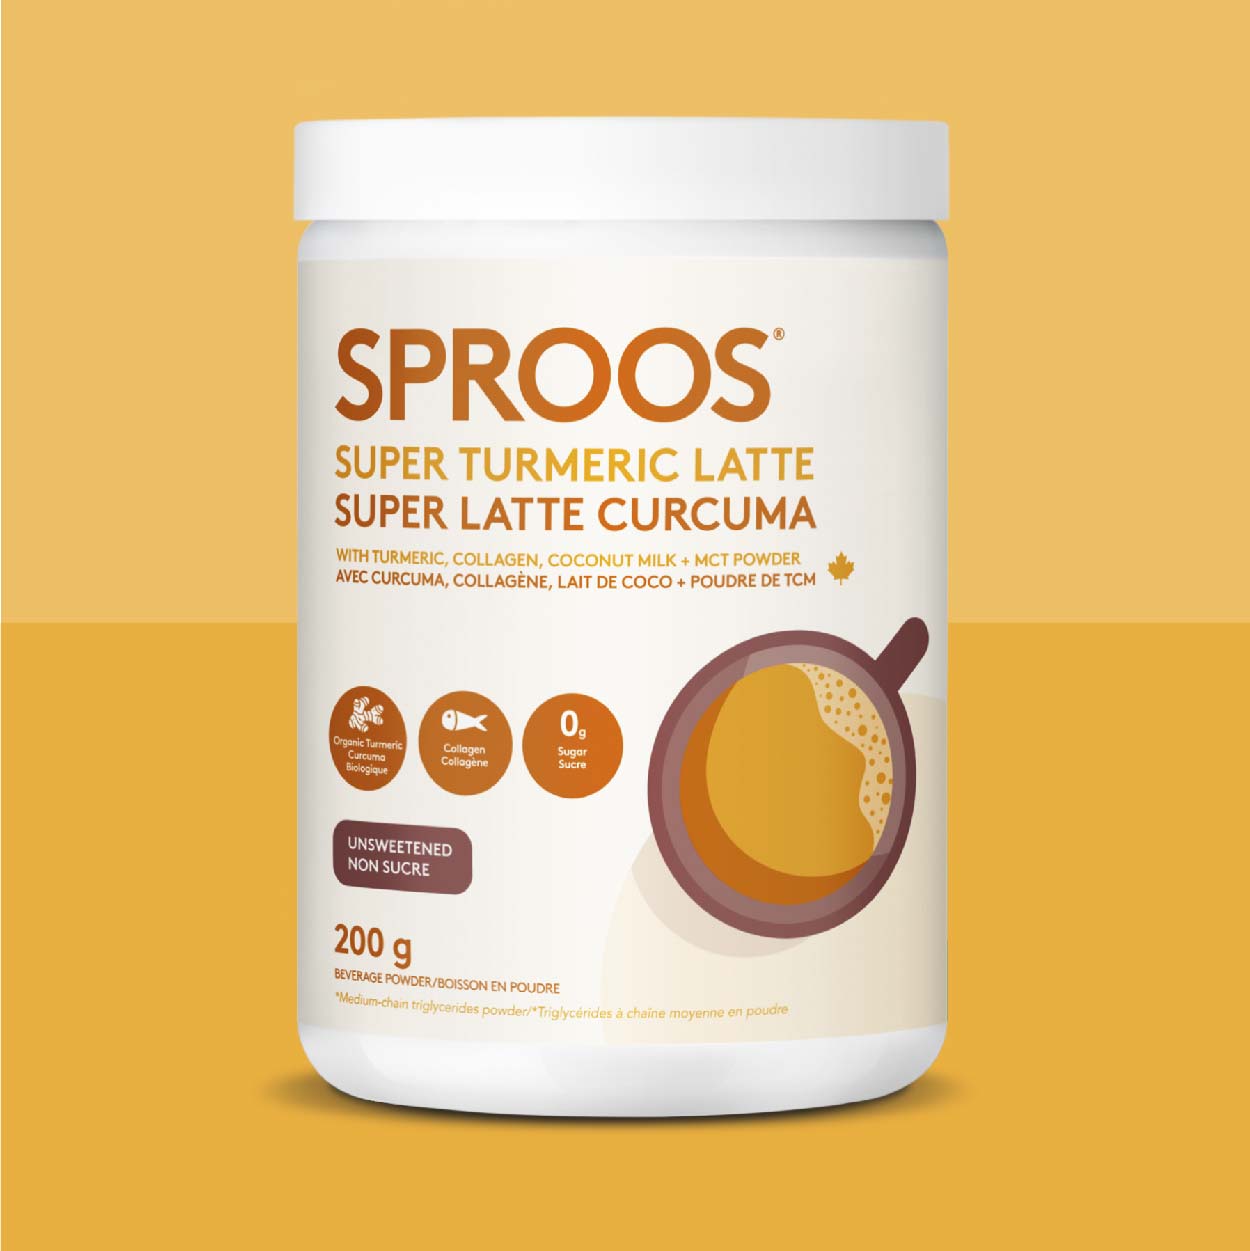 sproos-collagen-turmeric-latte-landing-page-01